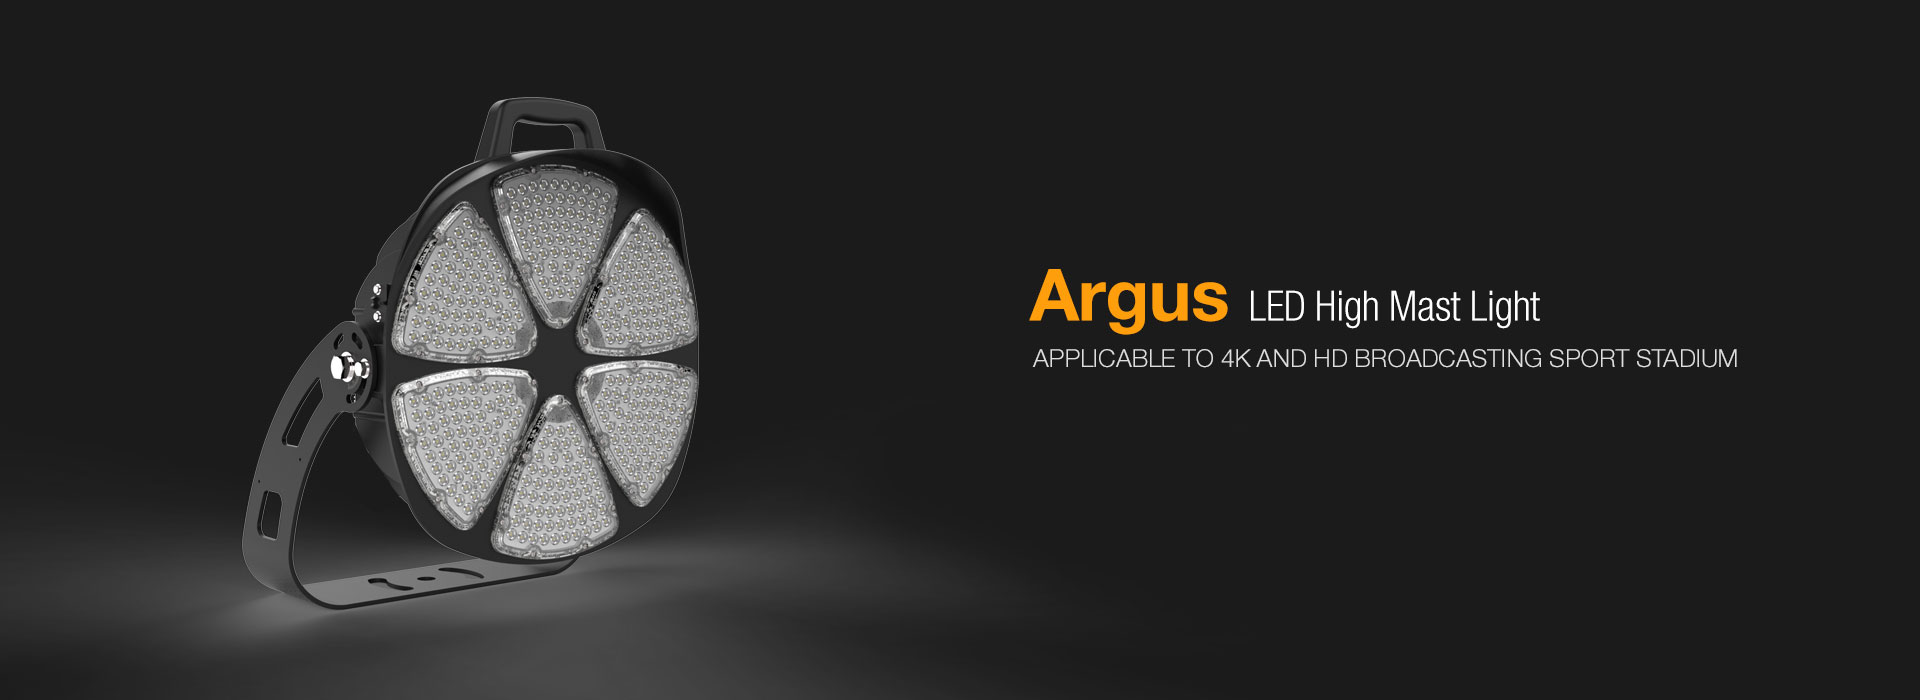 Argus LED High Mast Light